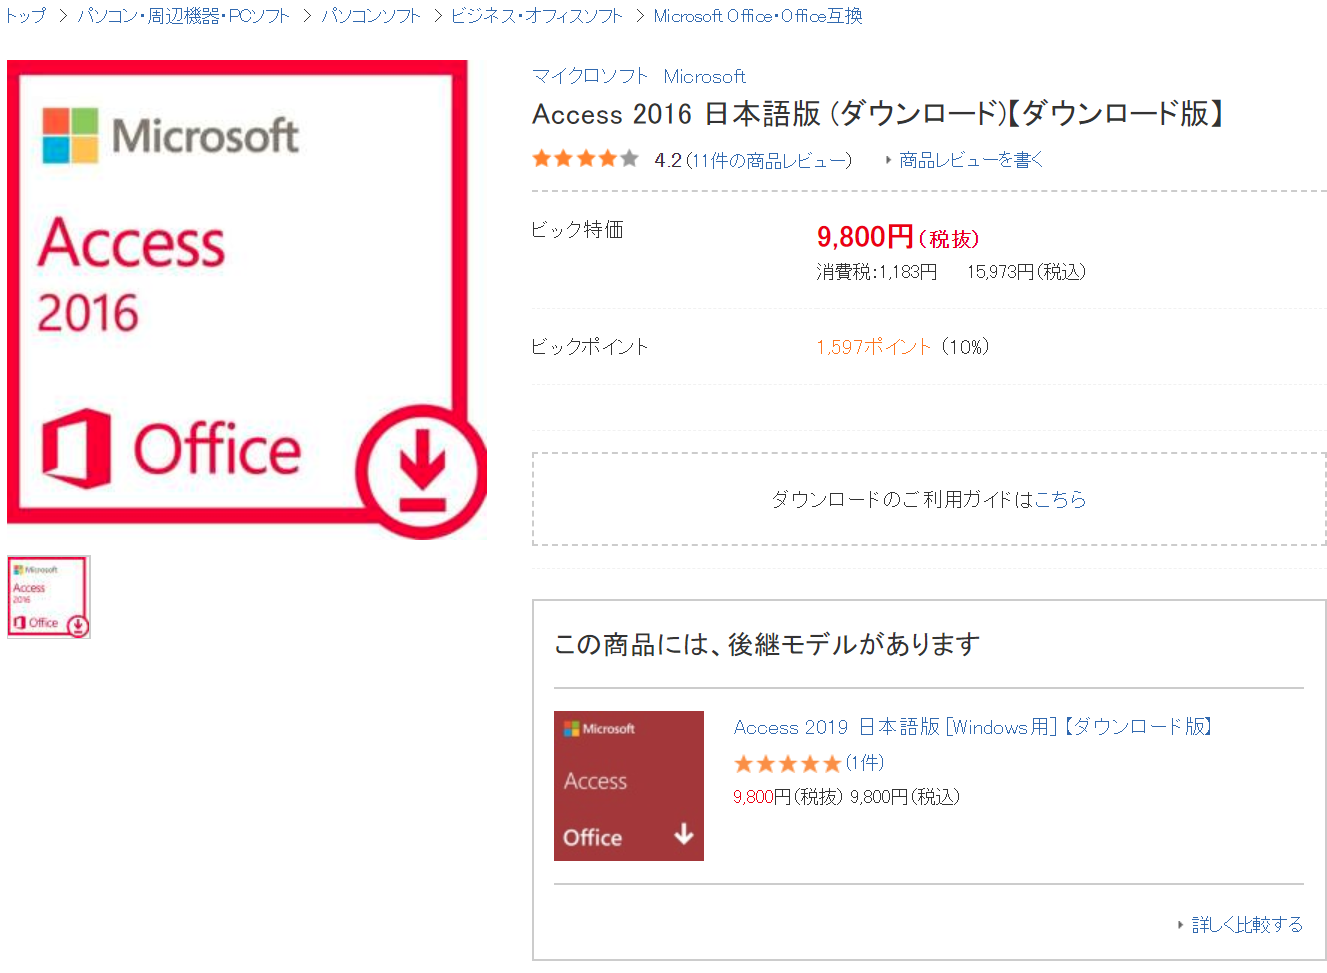 Access 16 日本語版 ダウンロード版 Ms Office Access 13 16 19 ダウンロード版 激安価格で販売しております